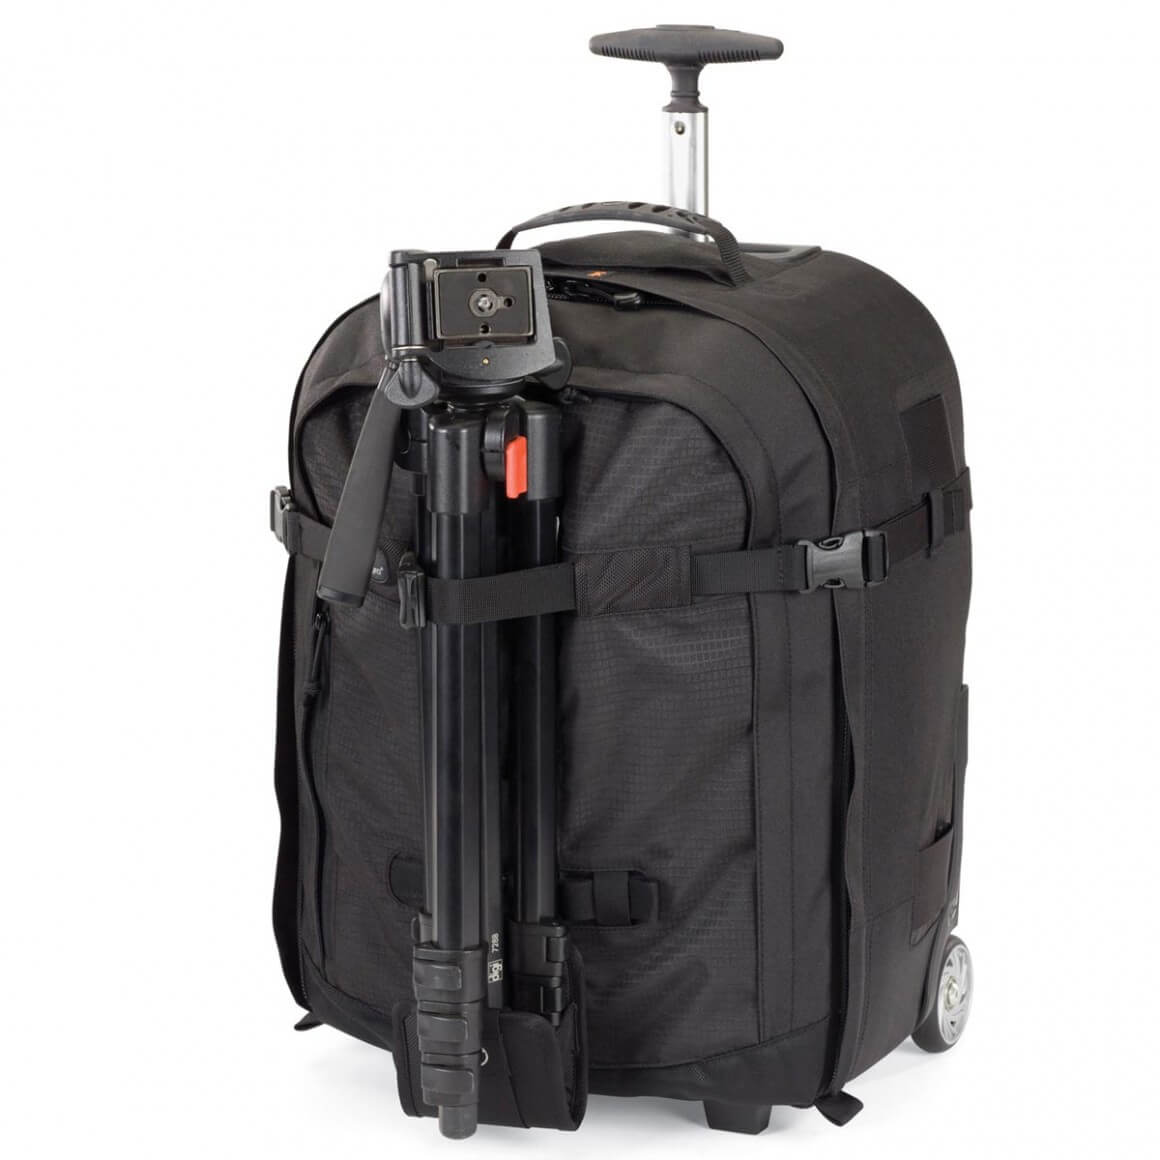 Pro Runner RL X450 AW Camera/Laptop Rolling Backpack